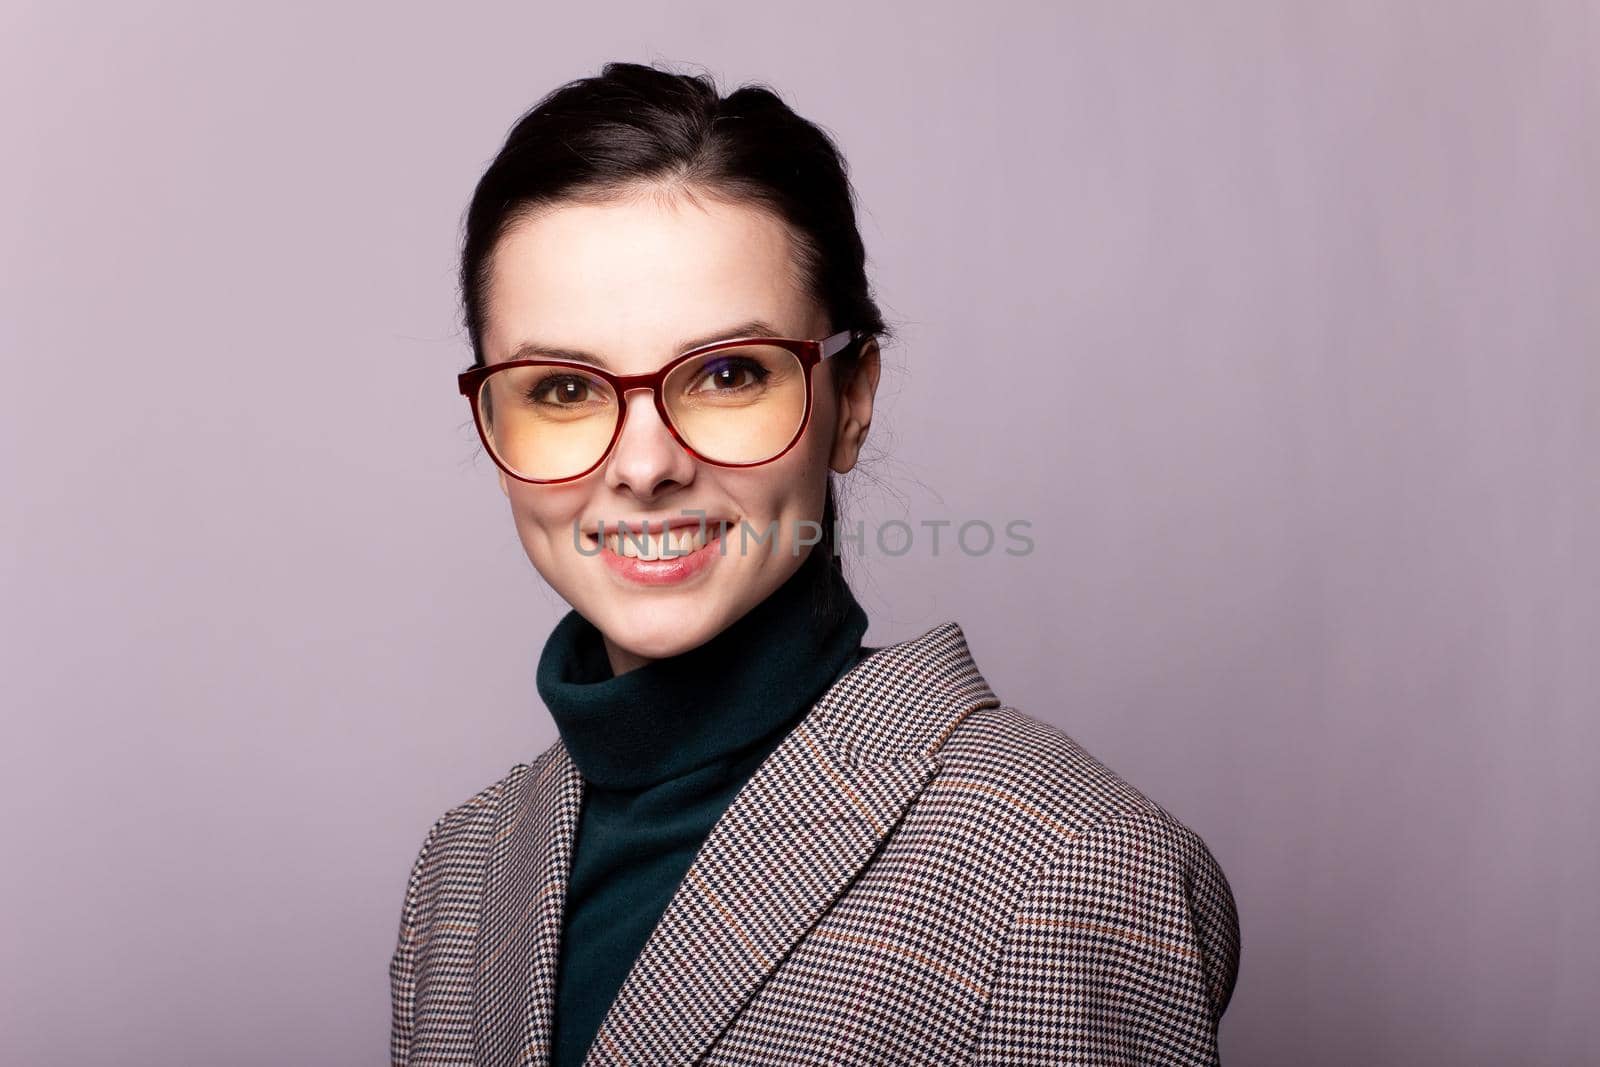 woman in a green turtleneck, jacket, glasses, portrait on a gray background by shilovskaya